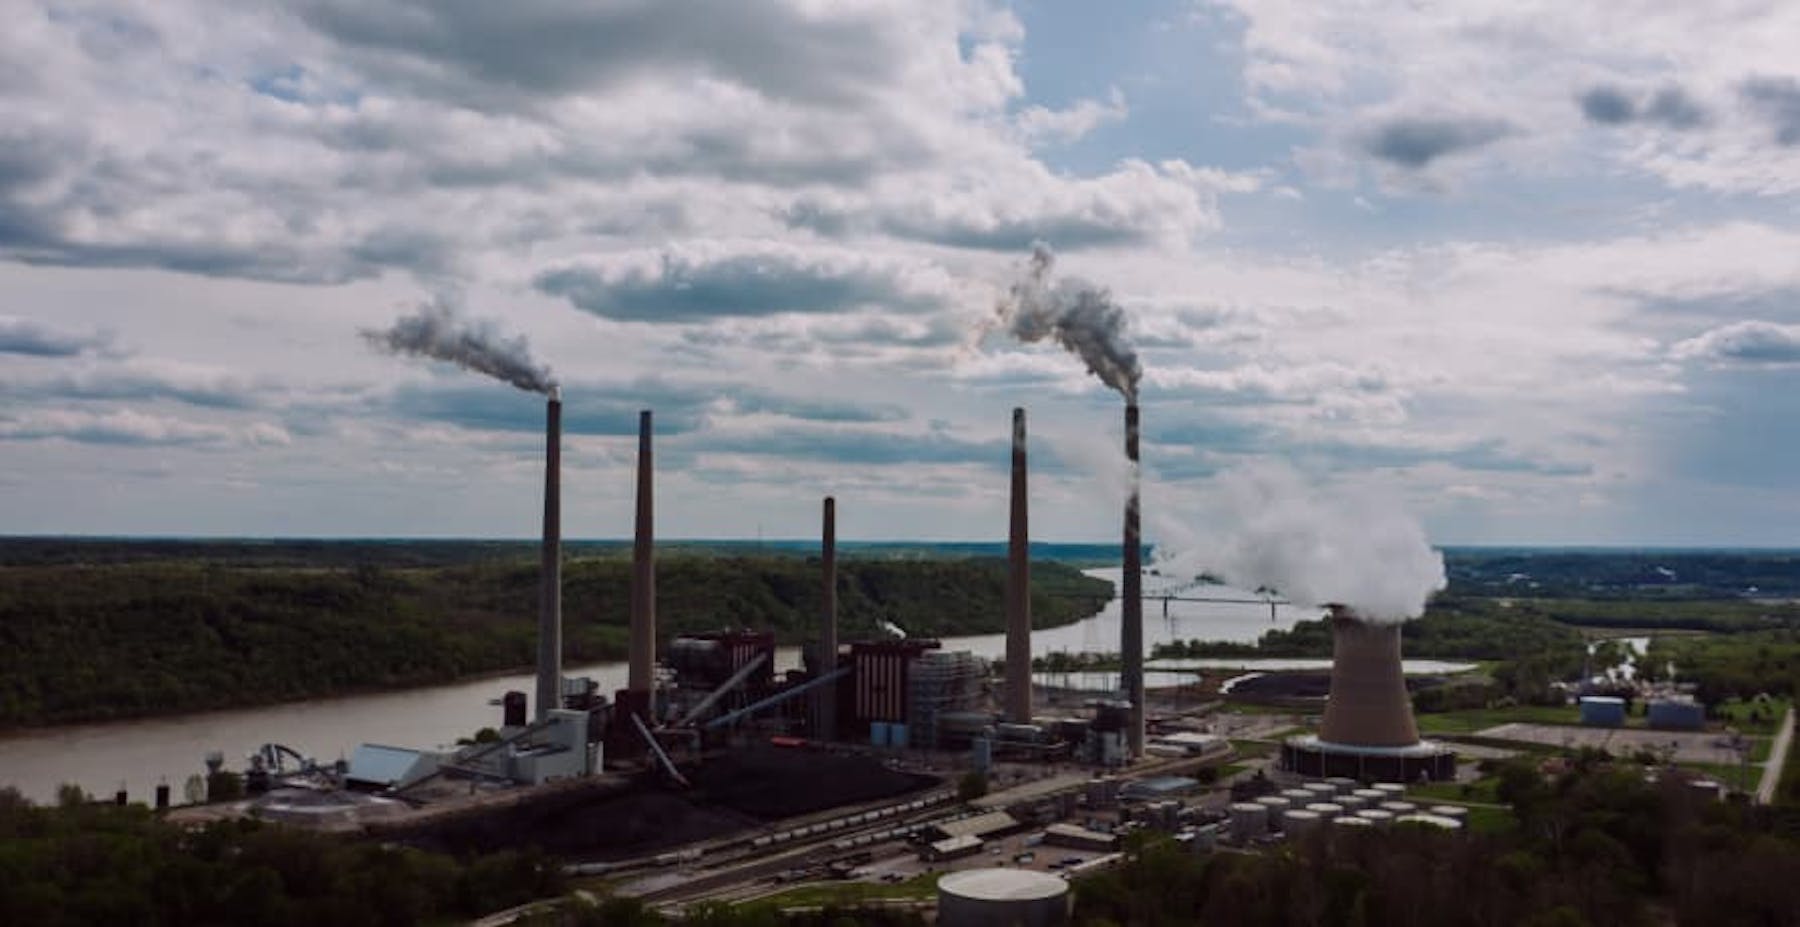 factories releasing pollution